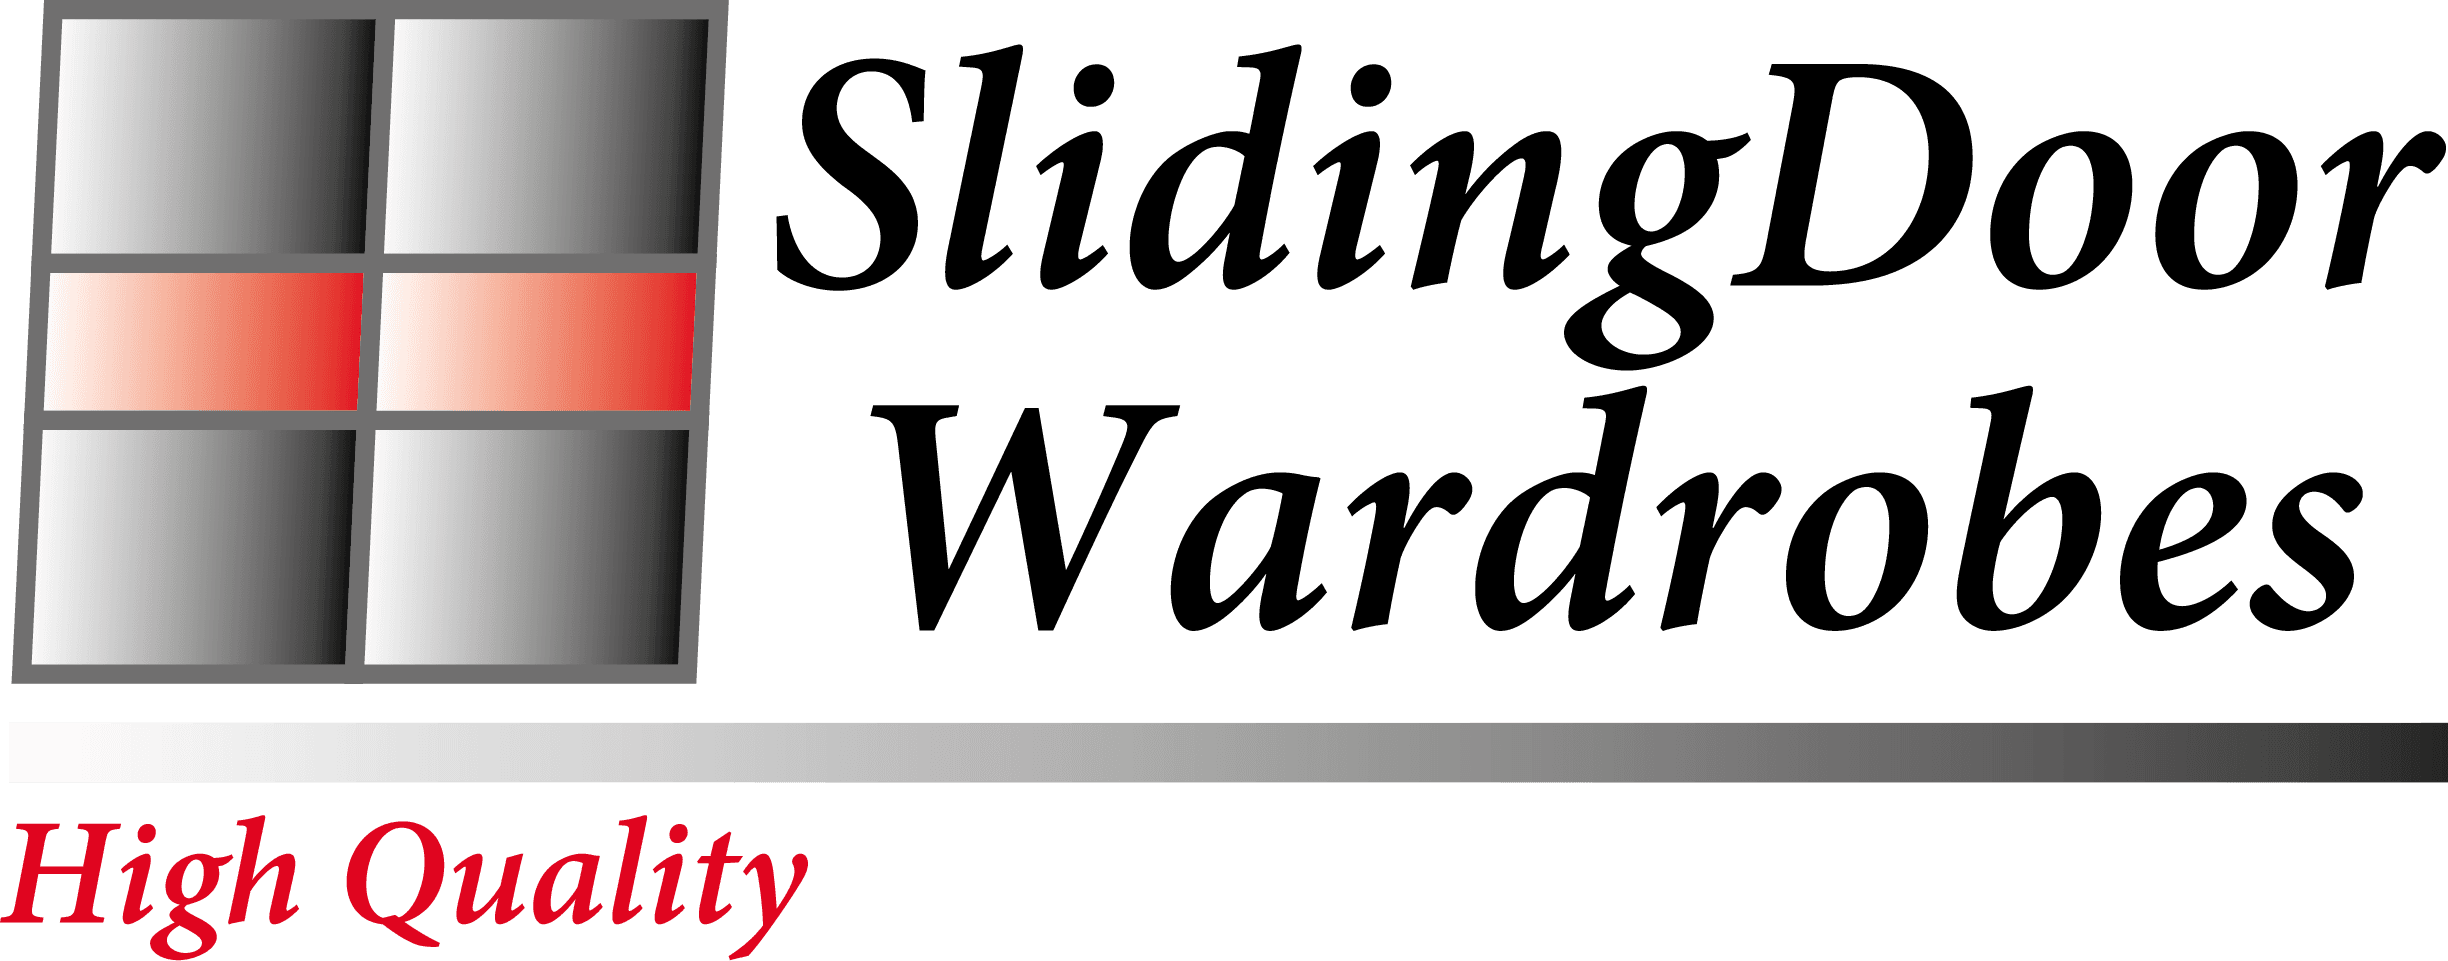 Sliding Door Wardrobes: Fitting the best wardrobes Nationwide